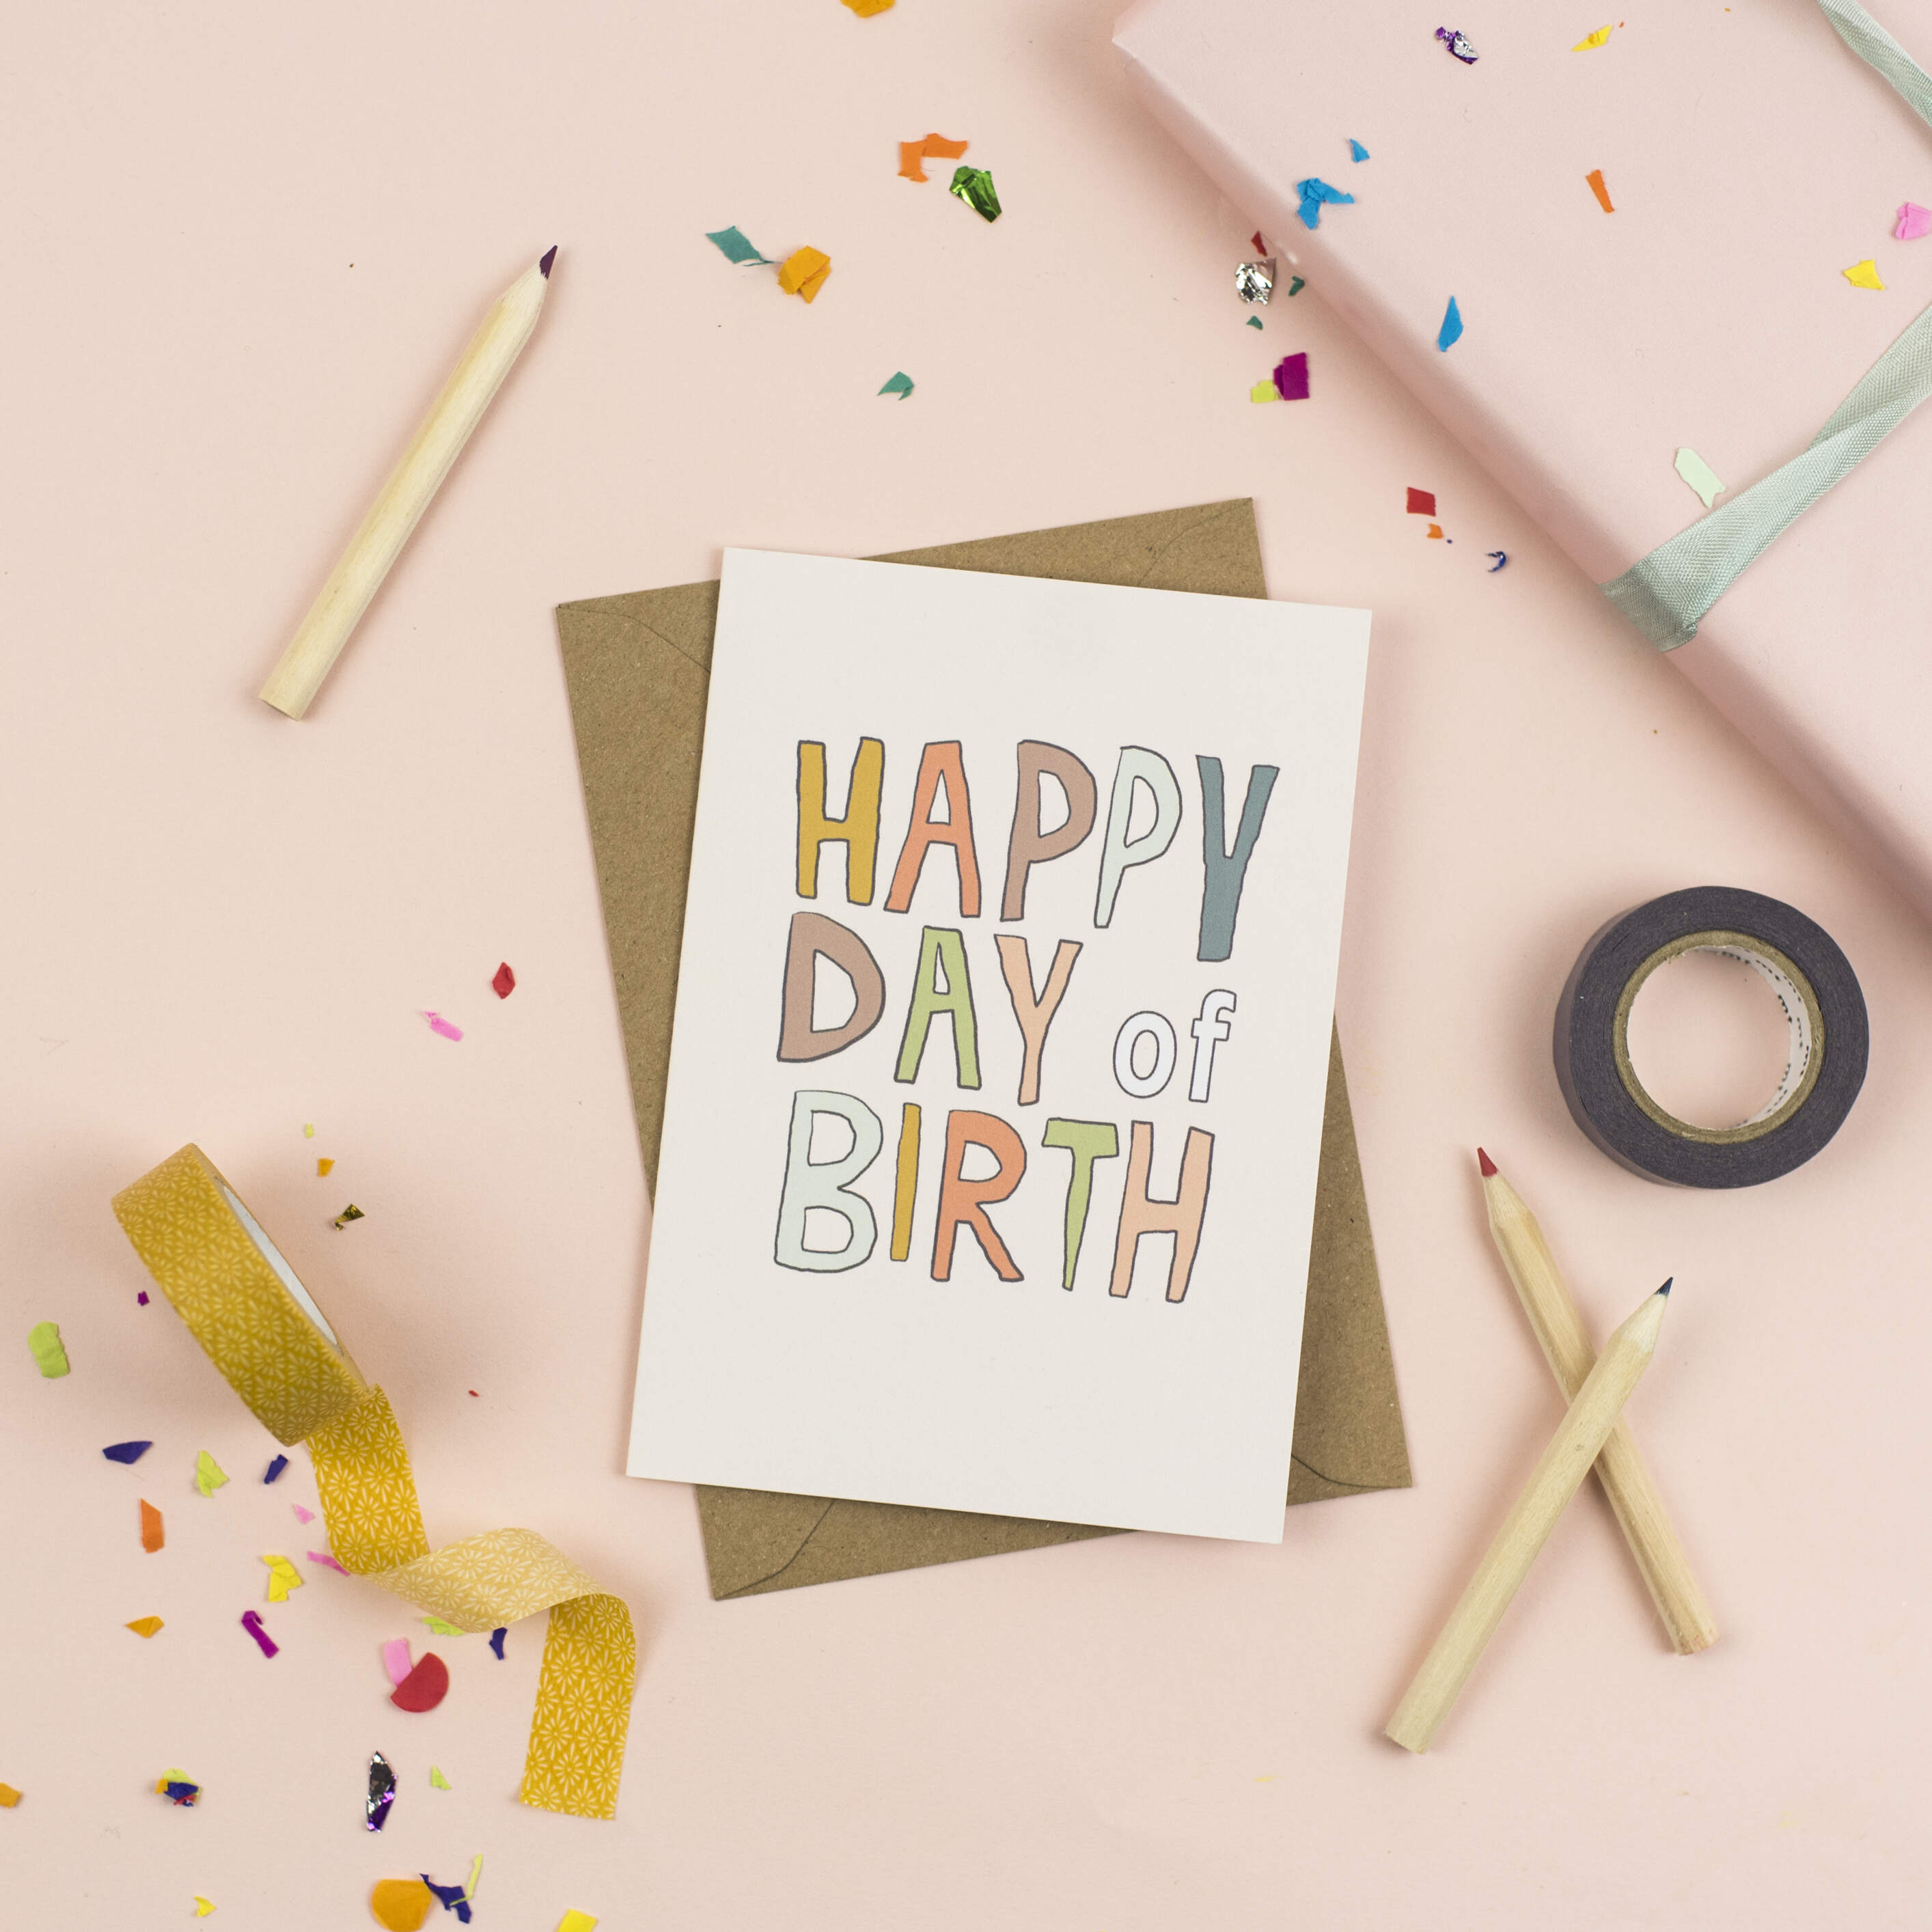 Happy Day of Birth Birthday greetings card